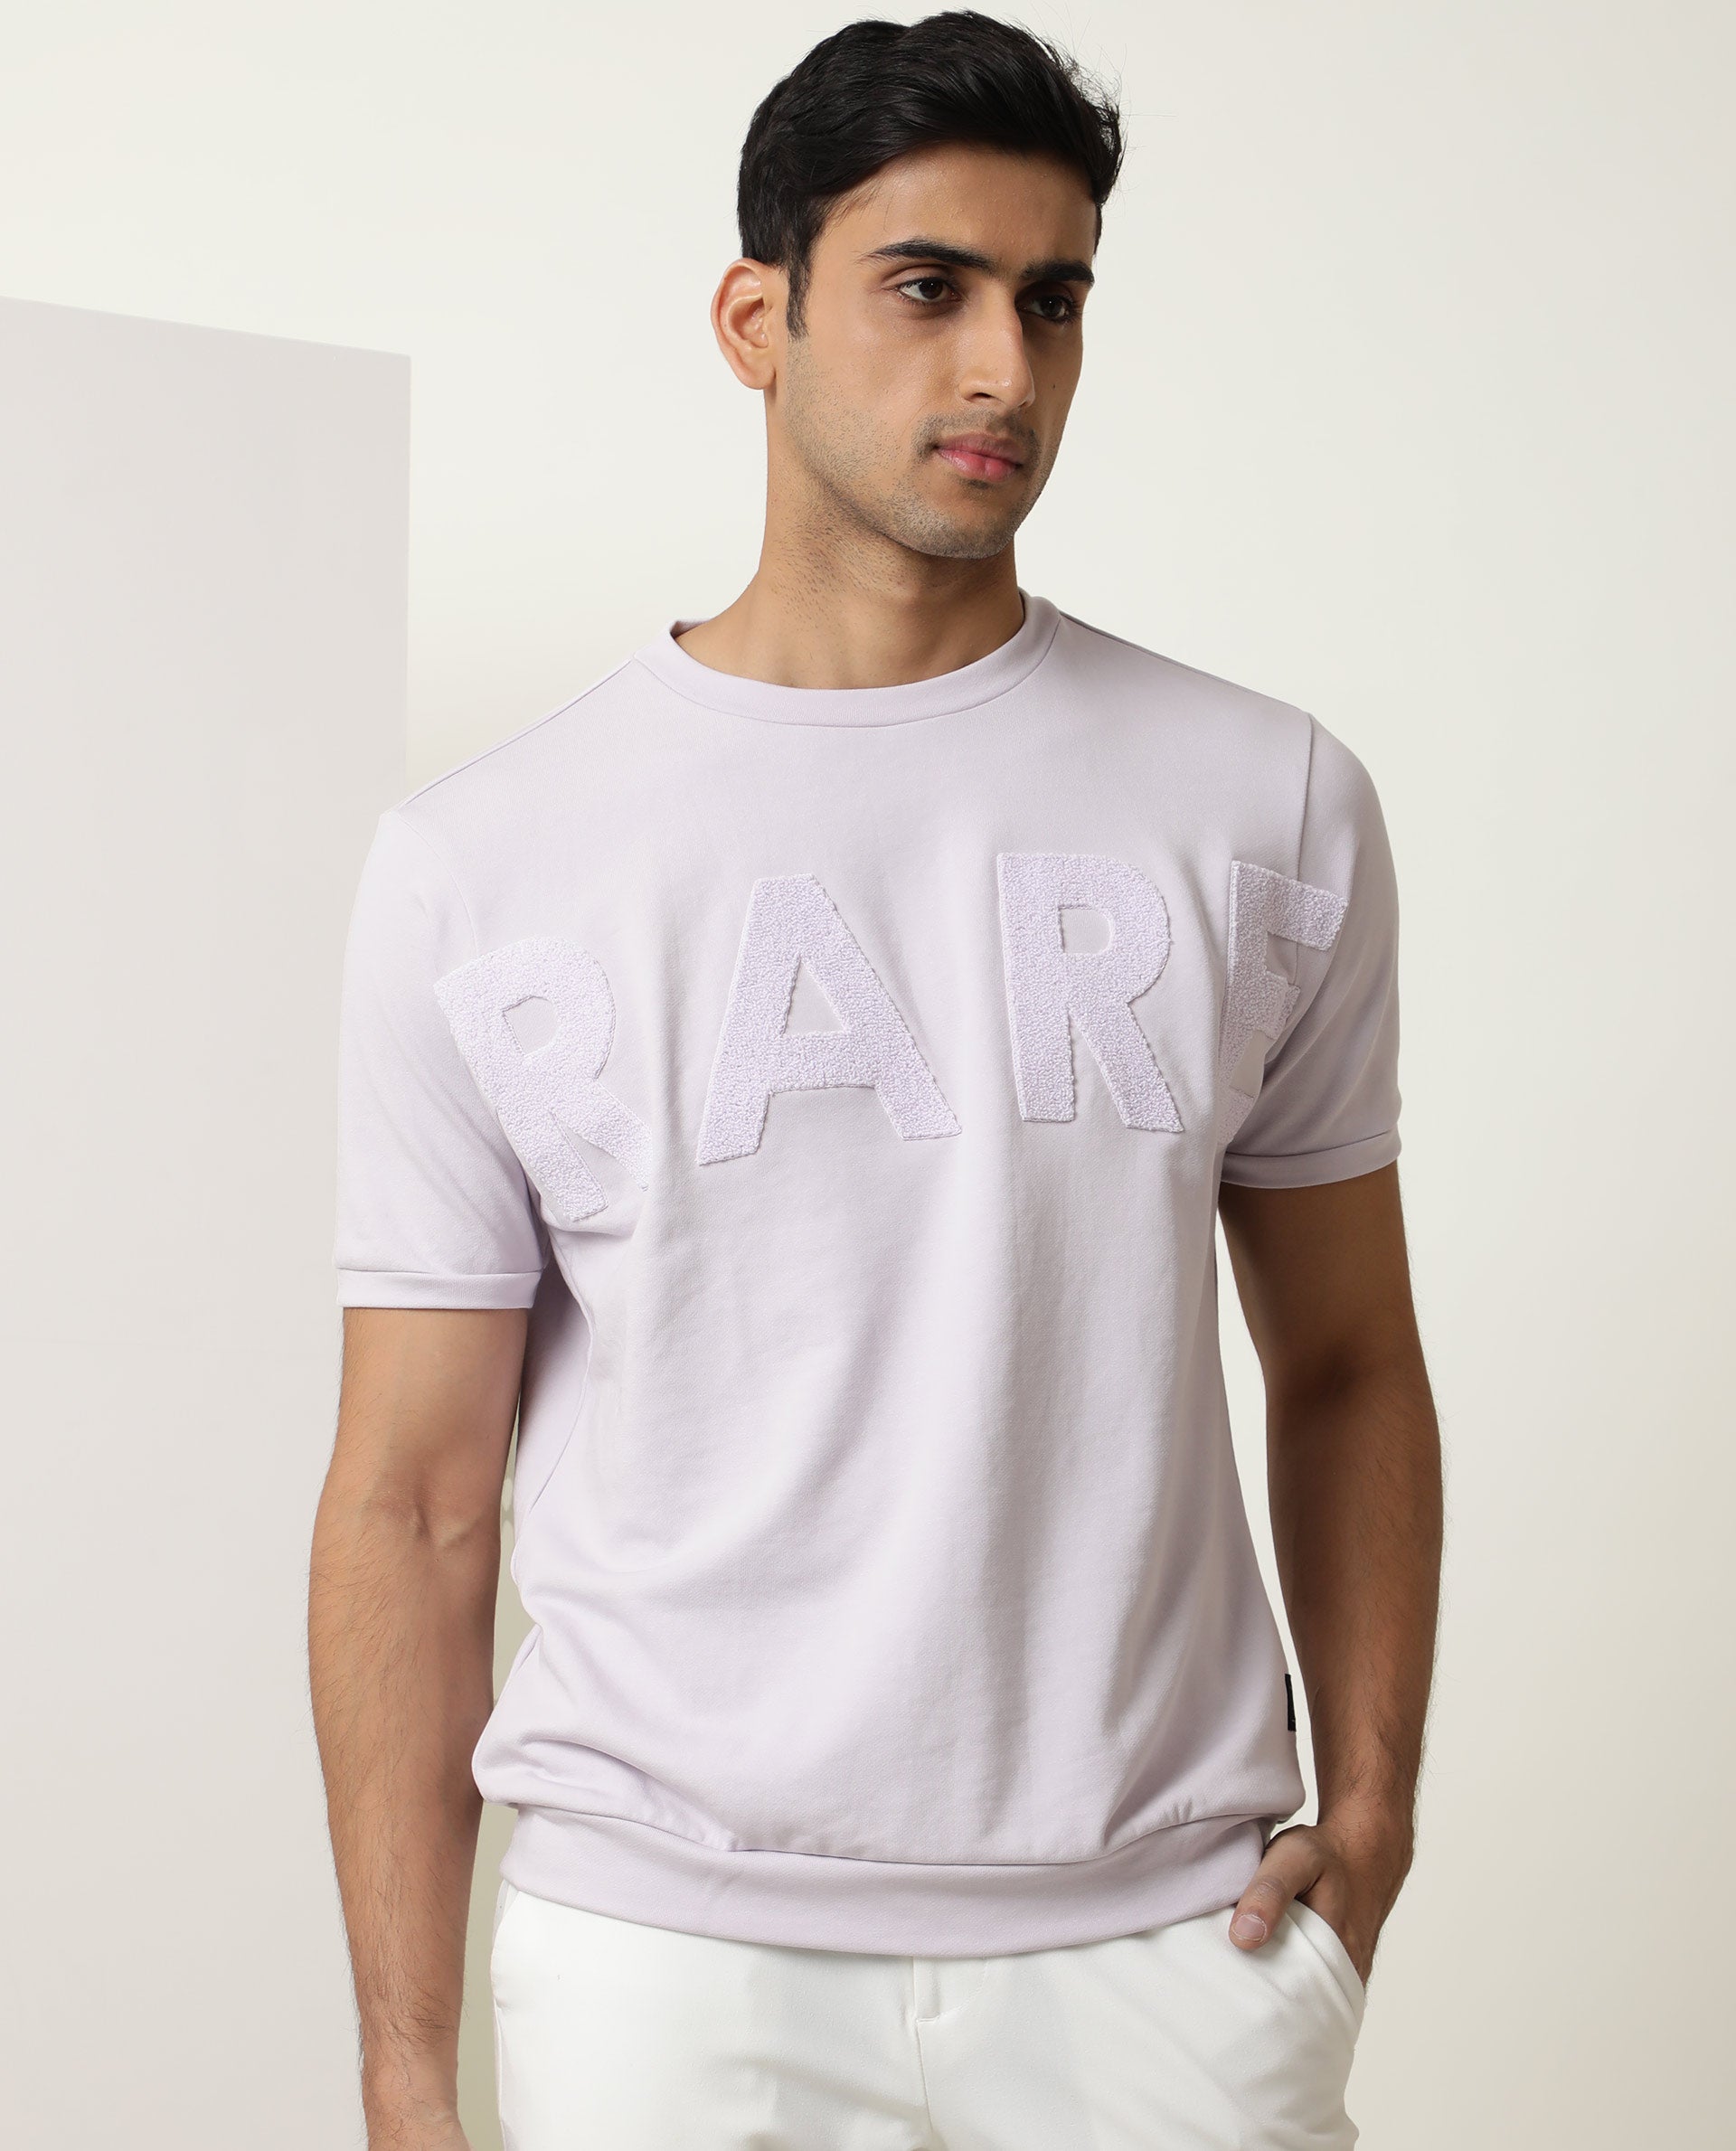 Men's Cotton Half Sleeve Plain White T Shirt, Size: M-XXL